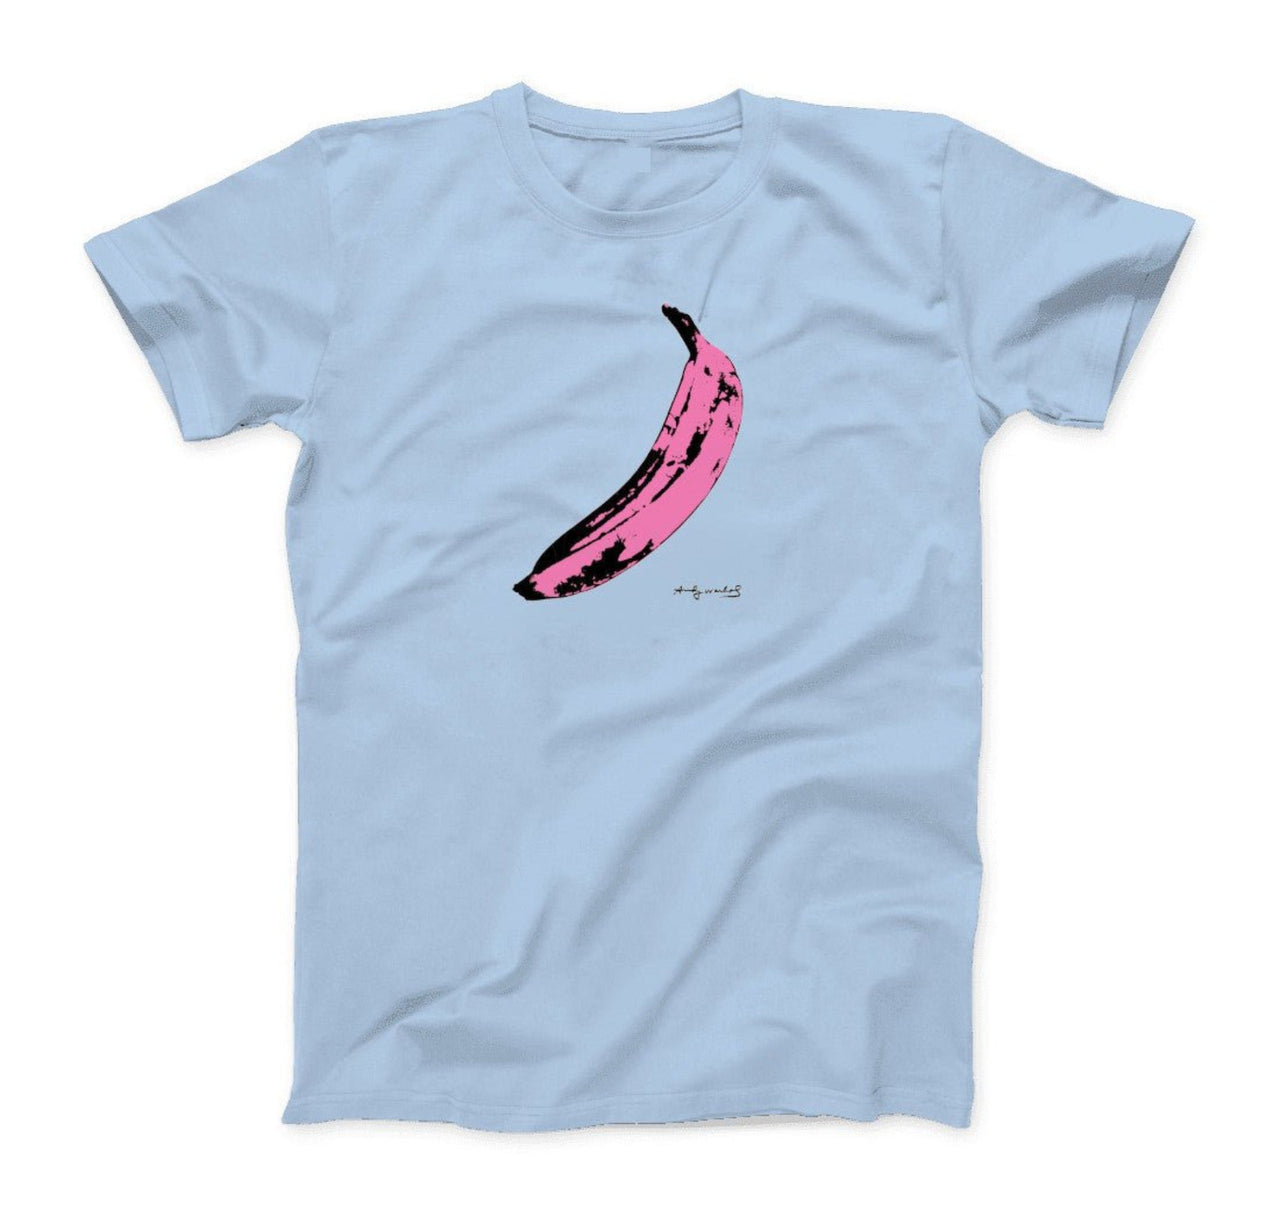 Andy Warhol Pink Banana 1967 Pop Art T-shirt - Clothing - Harvey Ltd